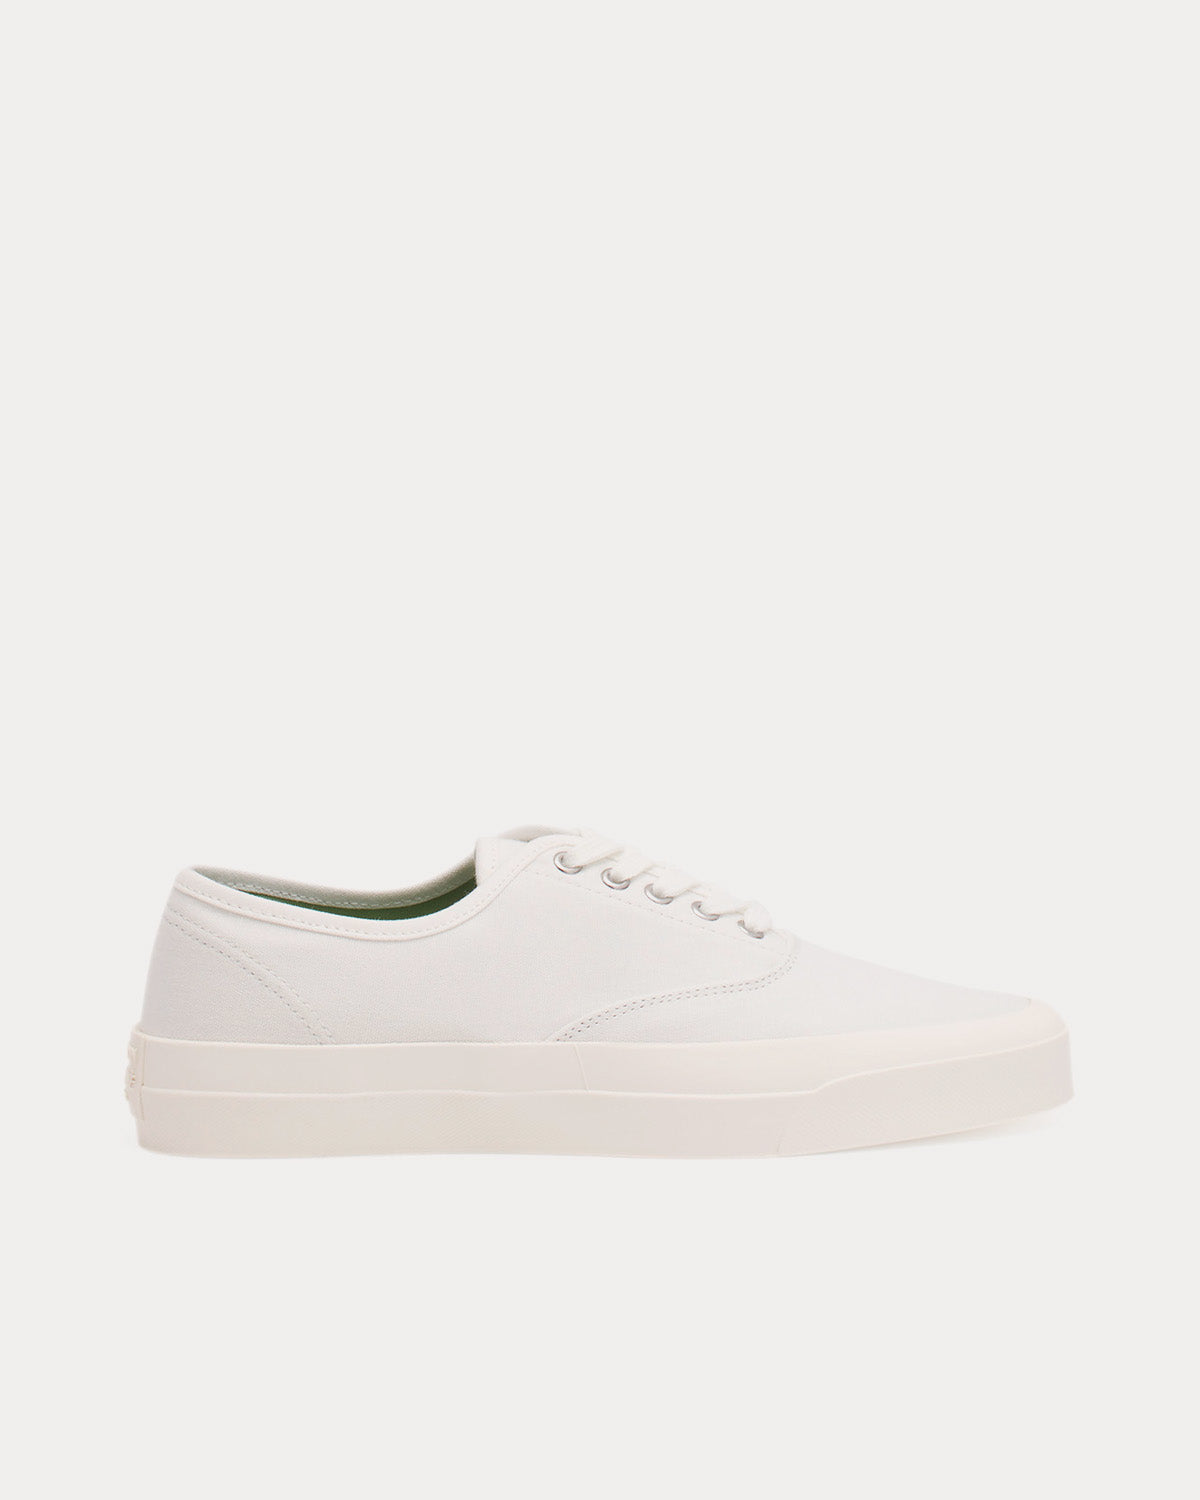 Maison Kitsuné - Laced Canvas White Low Top Sneakers